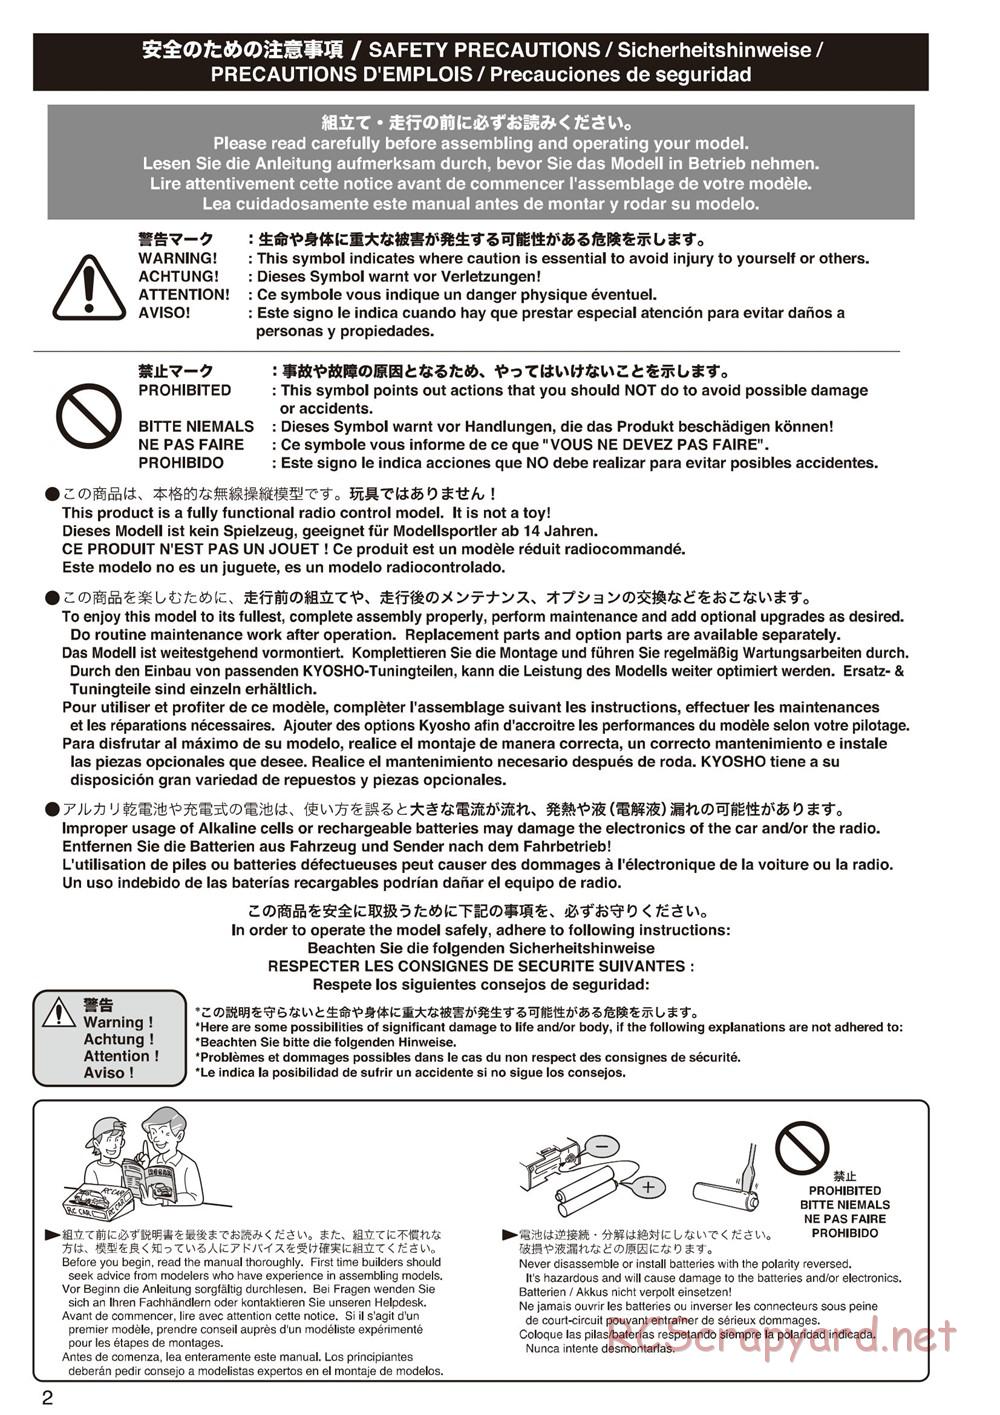 Kyosho - Ultima-DB - Manual - Page 2